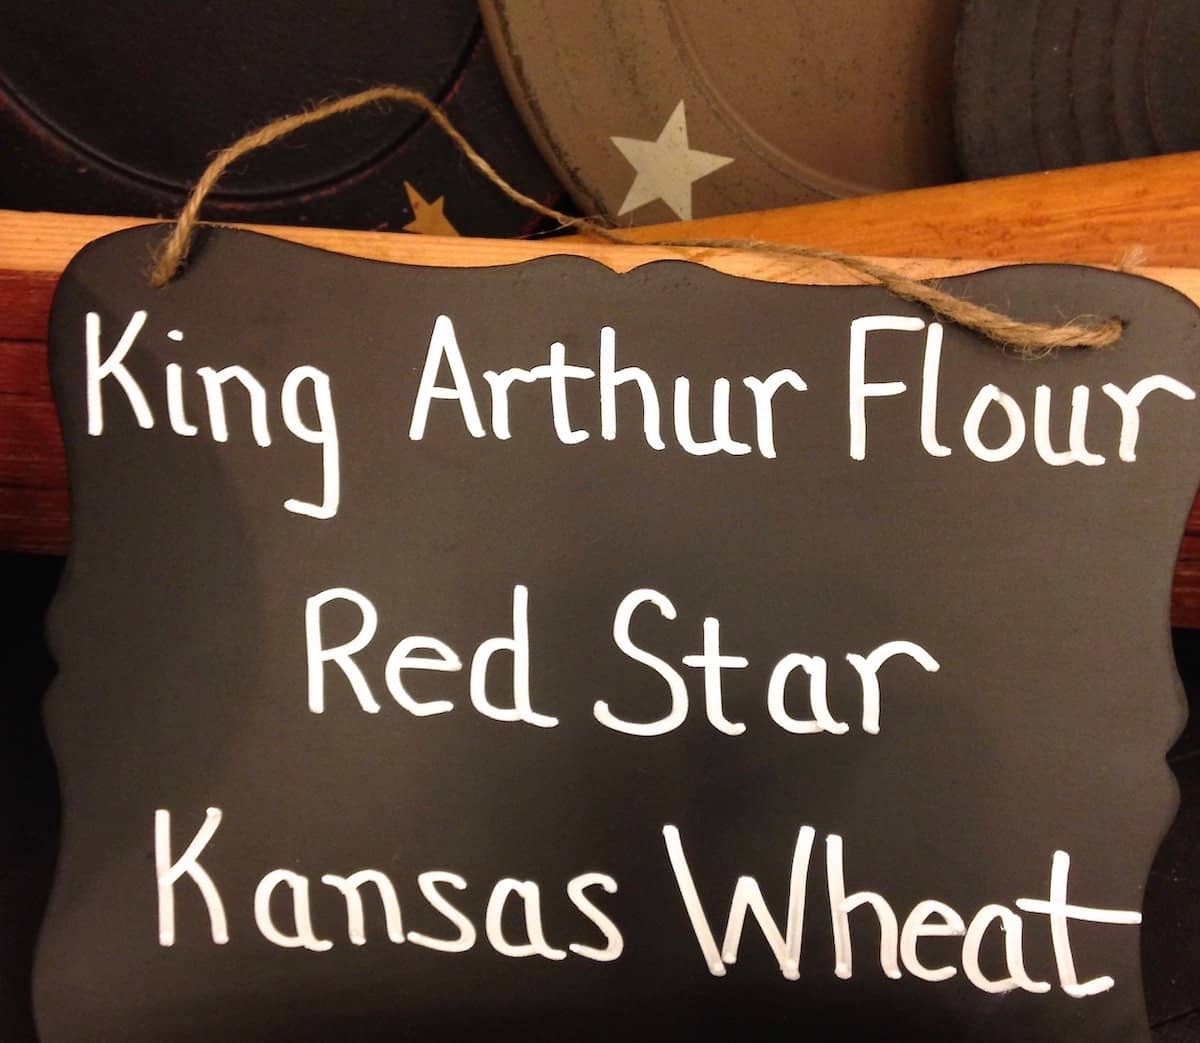 King Arthur Flour, Red Star and Kansas Wheat sign